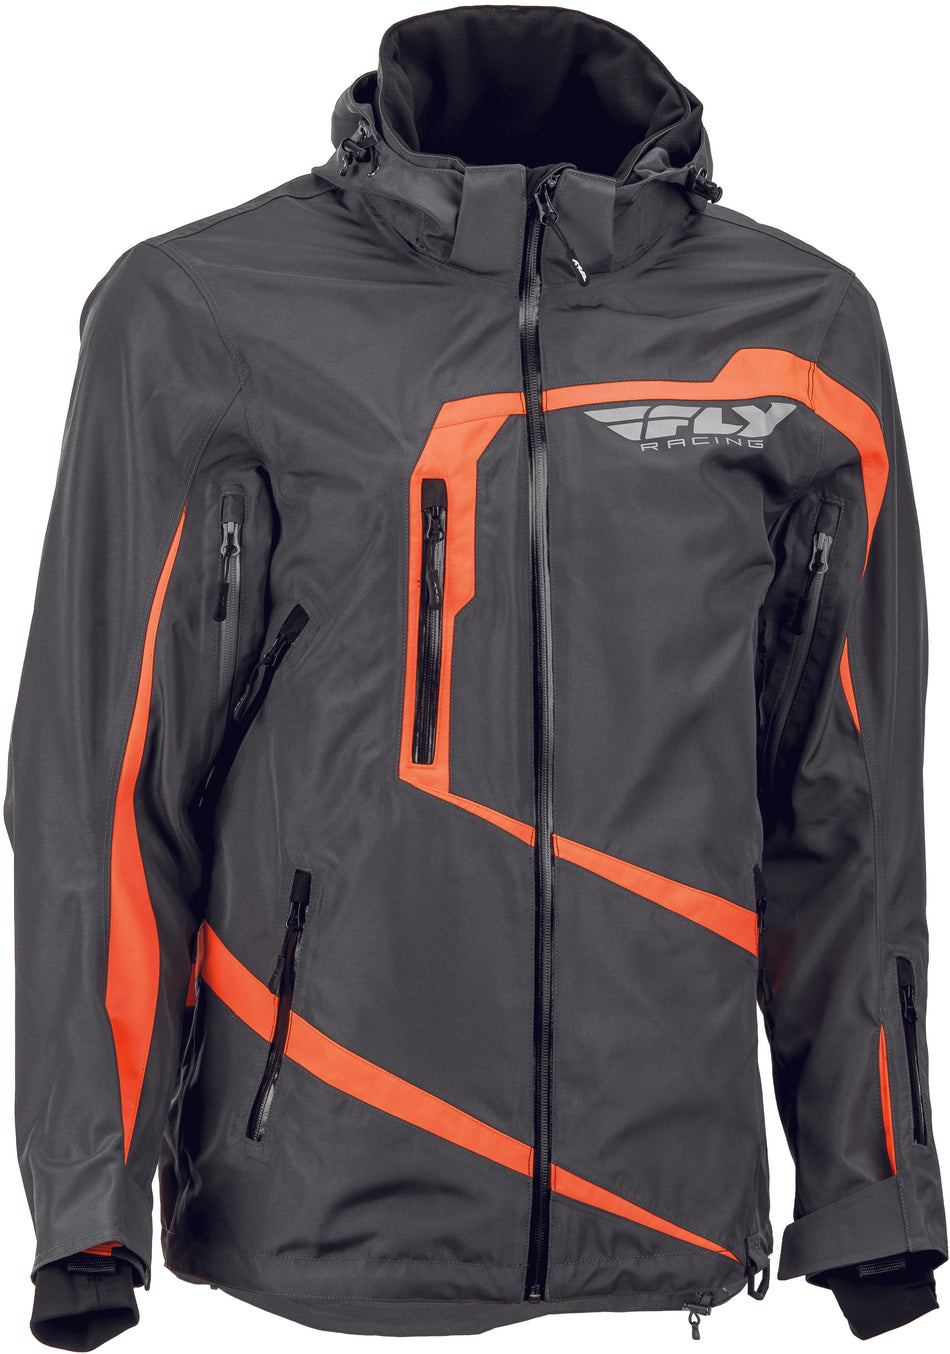 FLY RACING Fly Carbon Jacket Grey/Orange Xl 470-4048X